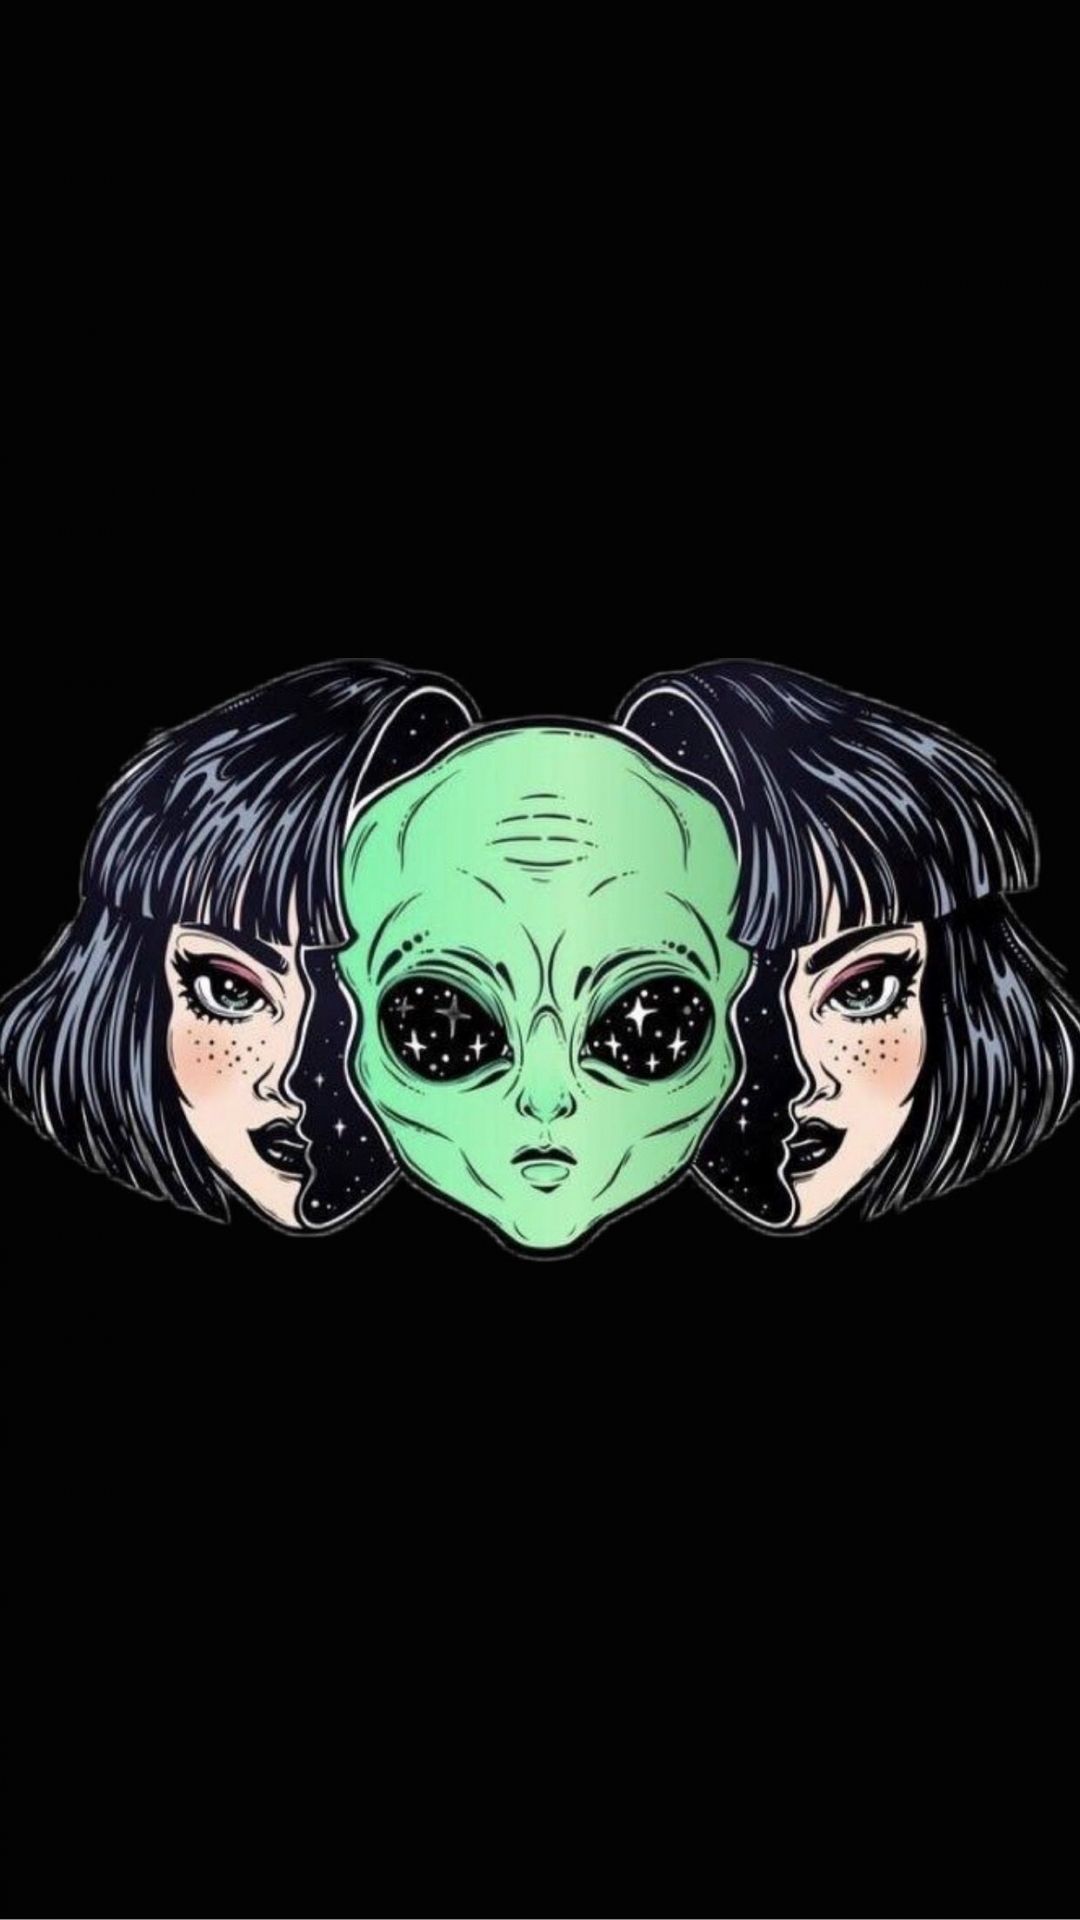 Aesthetic Cute Alien Wallpaper Android Download. Alien art, Psychedelic art, Art